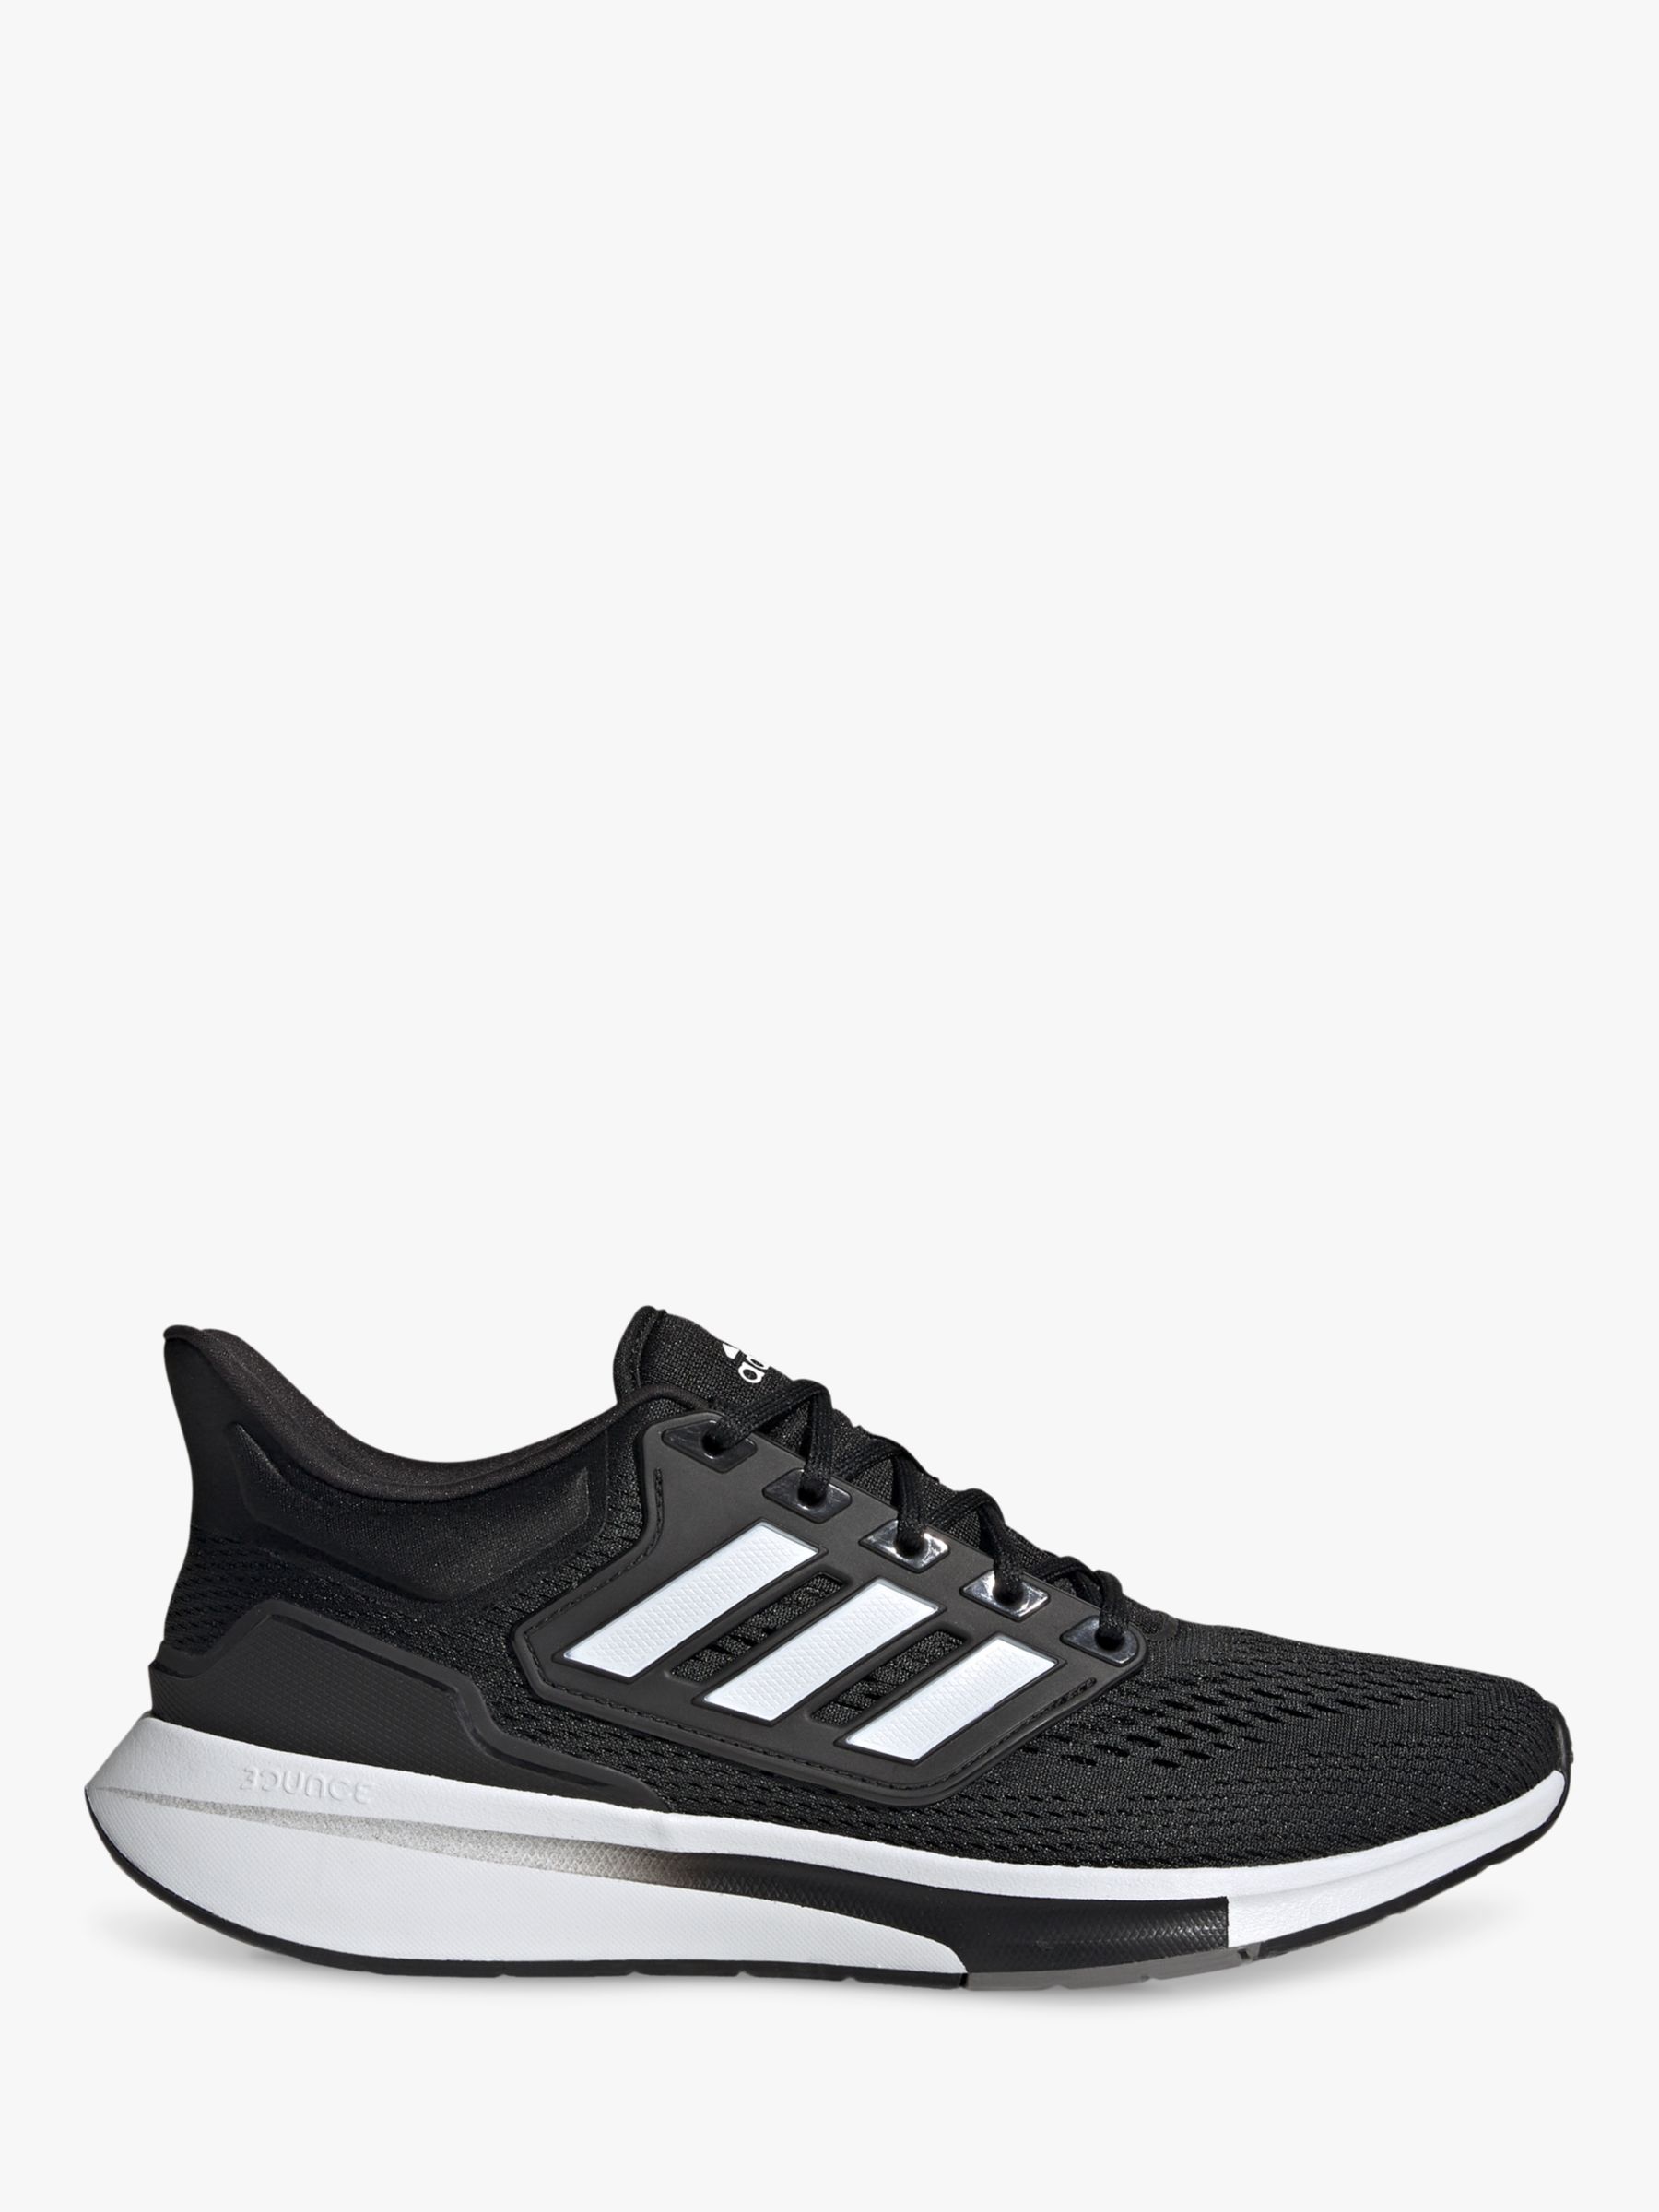 adidas EQ21 Run Men's Running Shoes, Core Black/Cloud White/Grey Four, 8